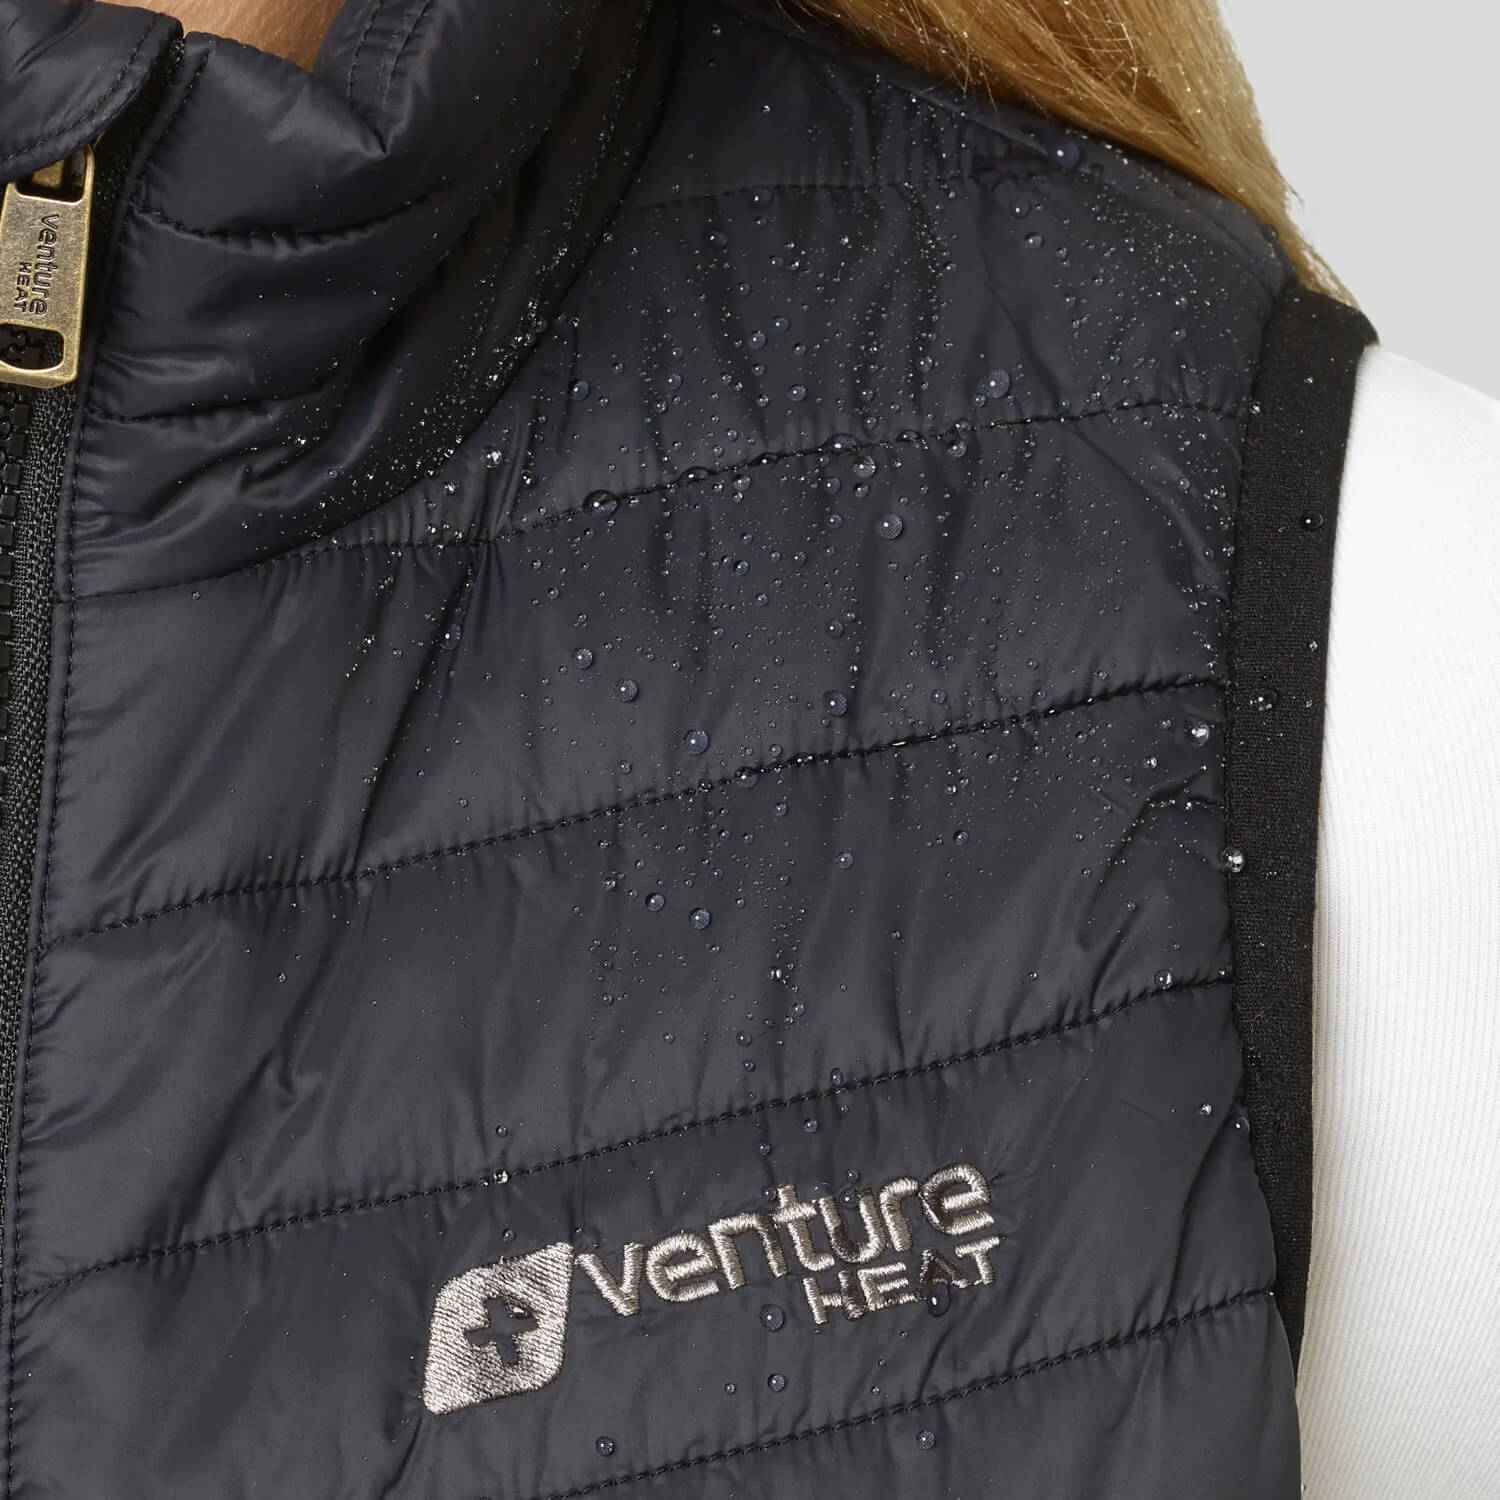 Venture Heat | Women’s Roam 3.0 Insulated Heated Vest with HeatSync™ - XS / AU 8 - Heated Gear - Peak Moto